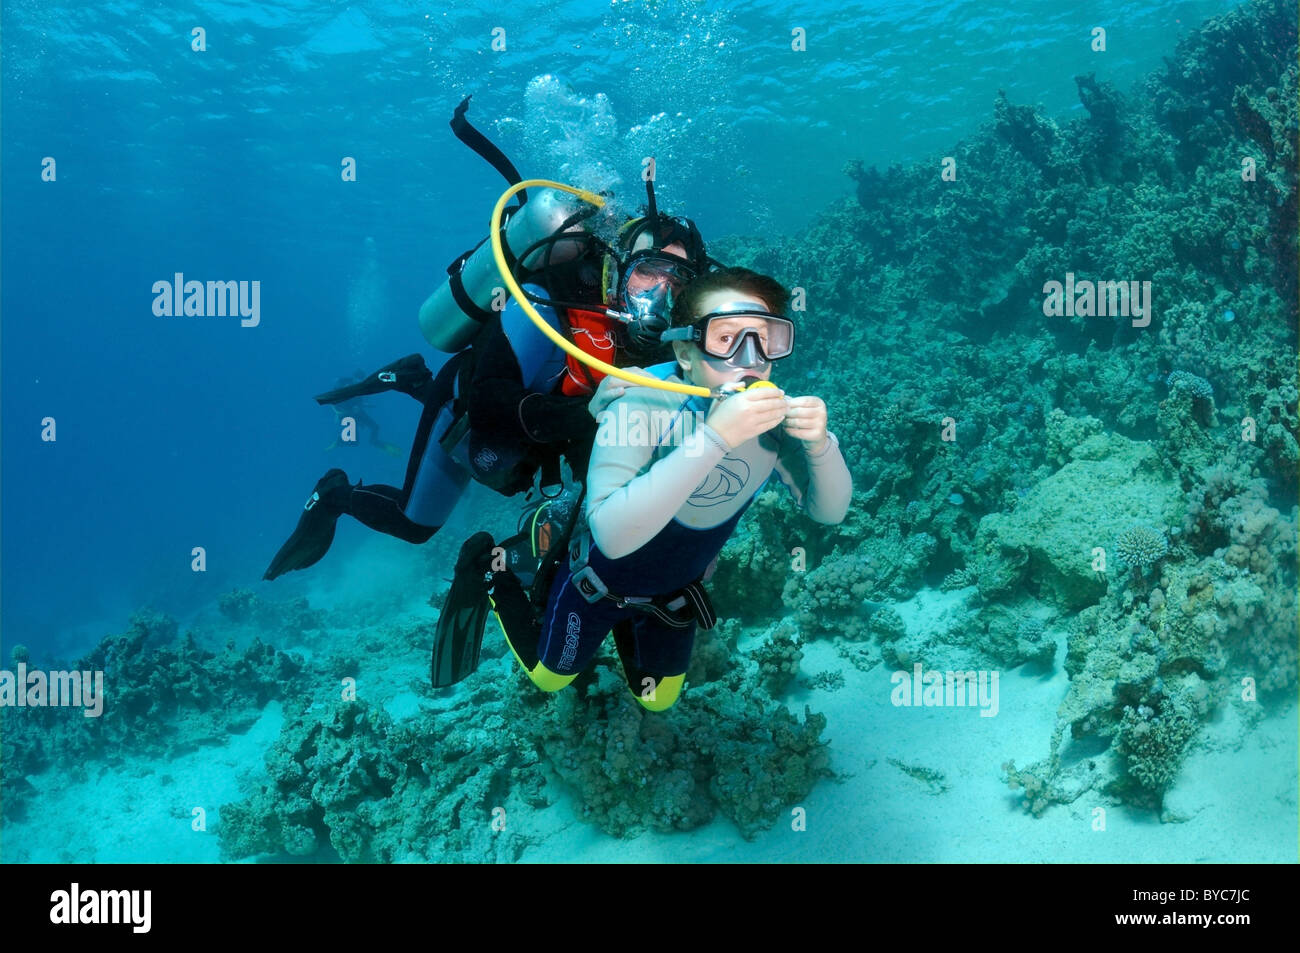 Scuba diver shows the child the underwater world Stock Photo